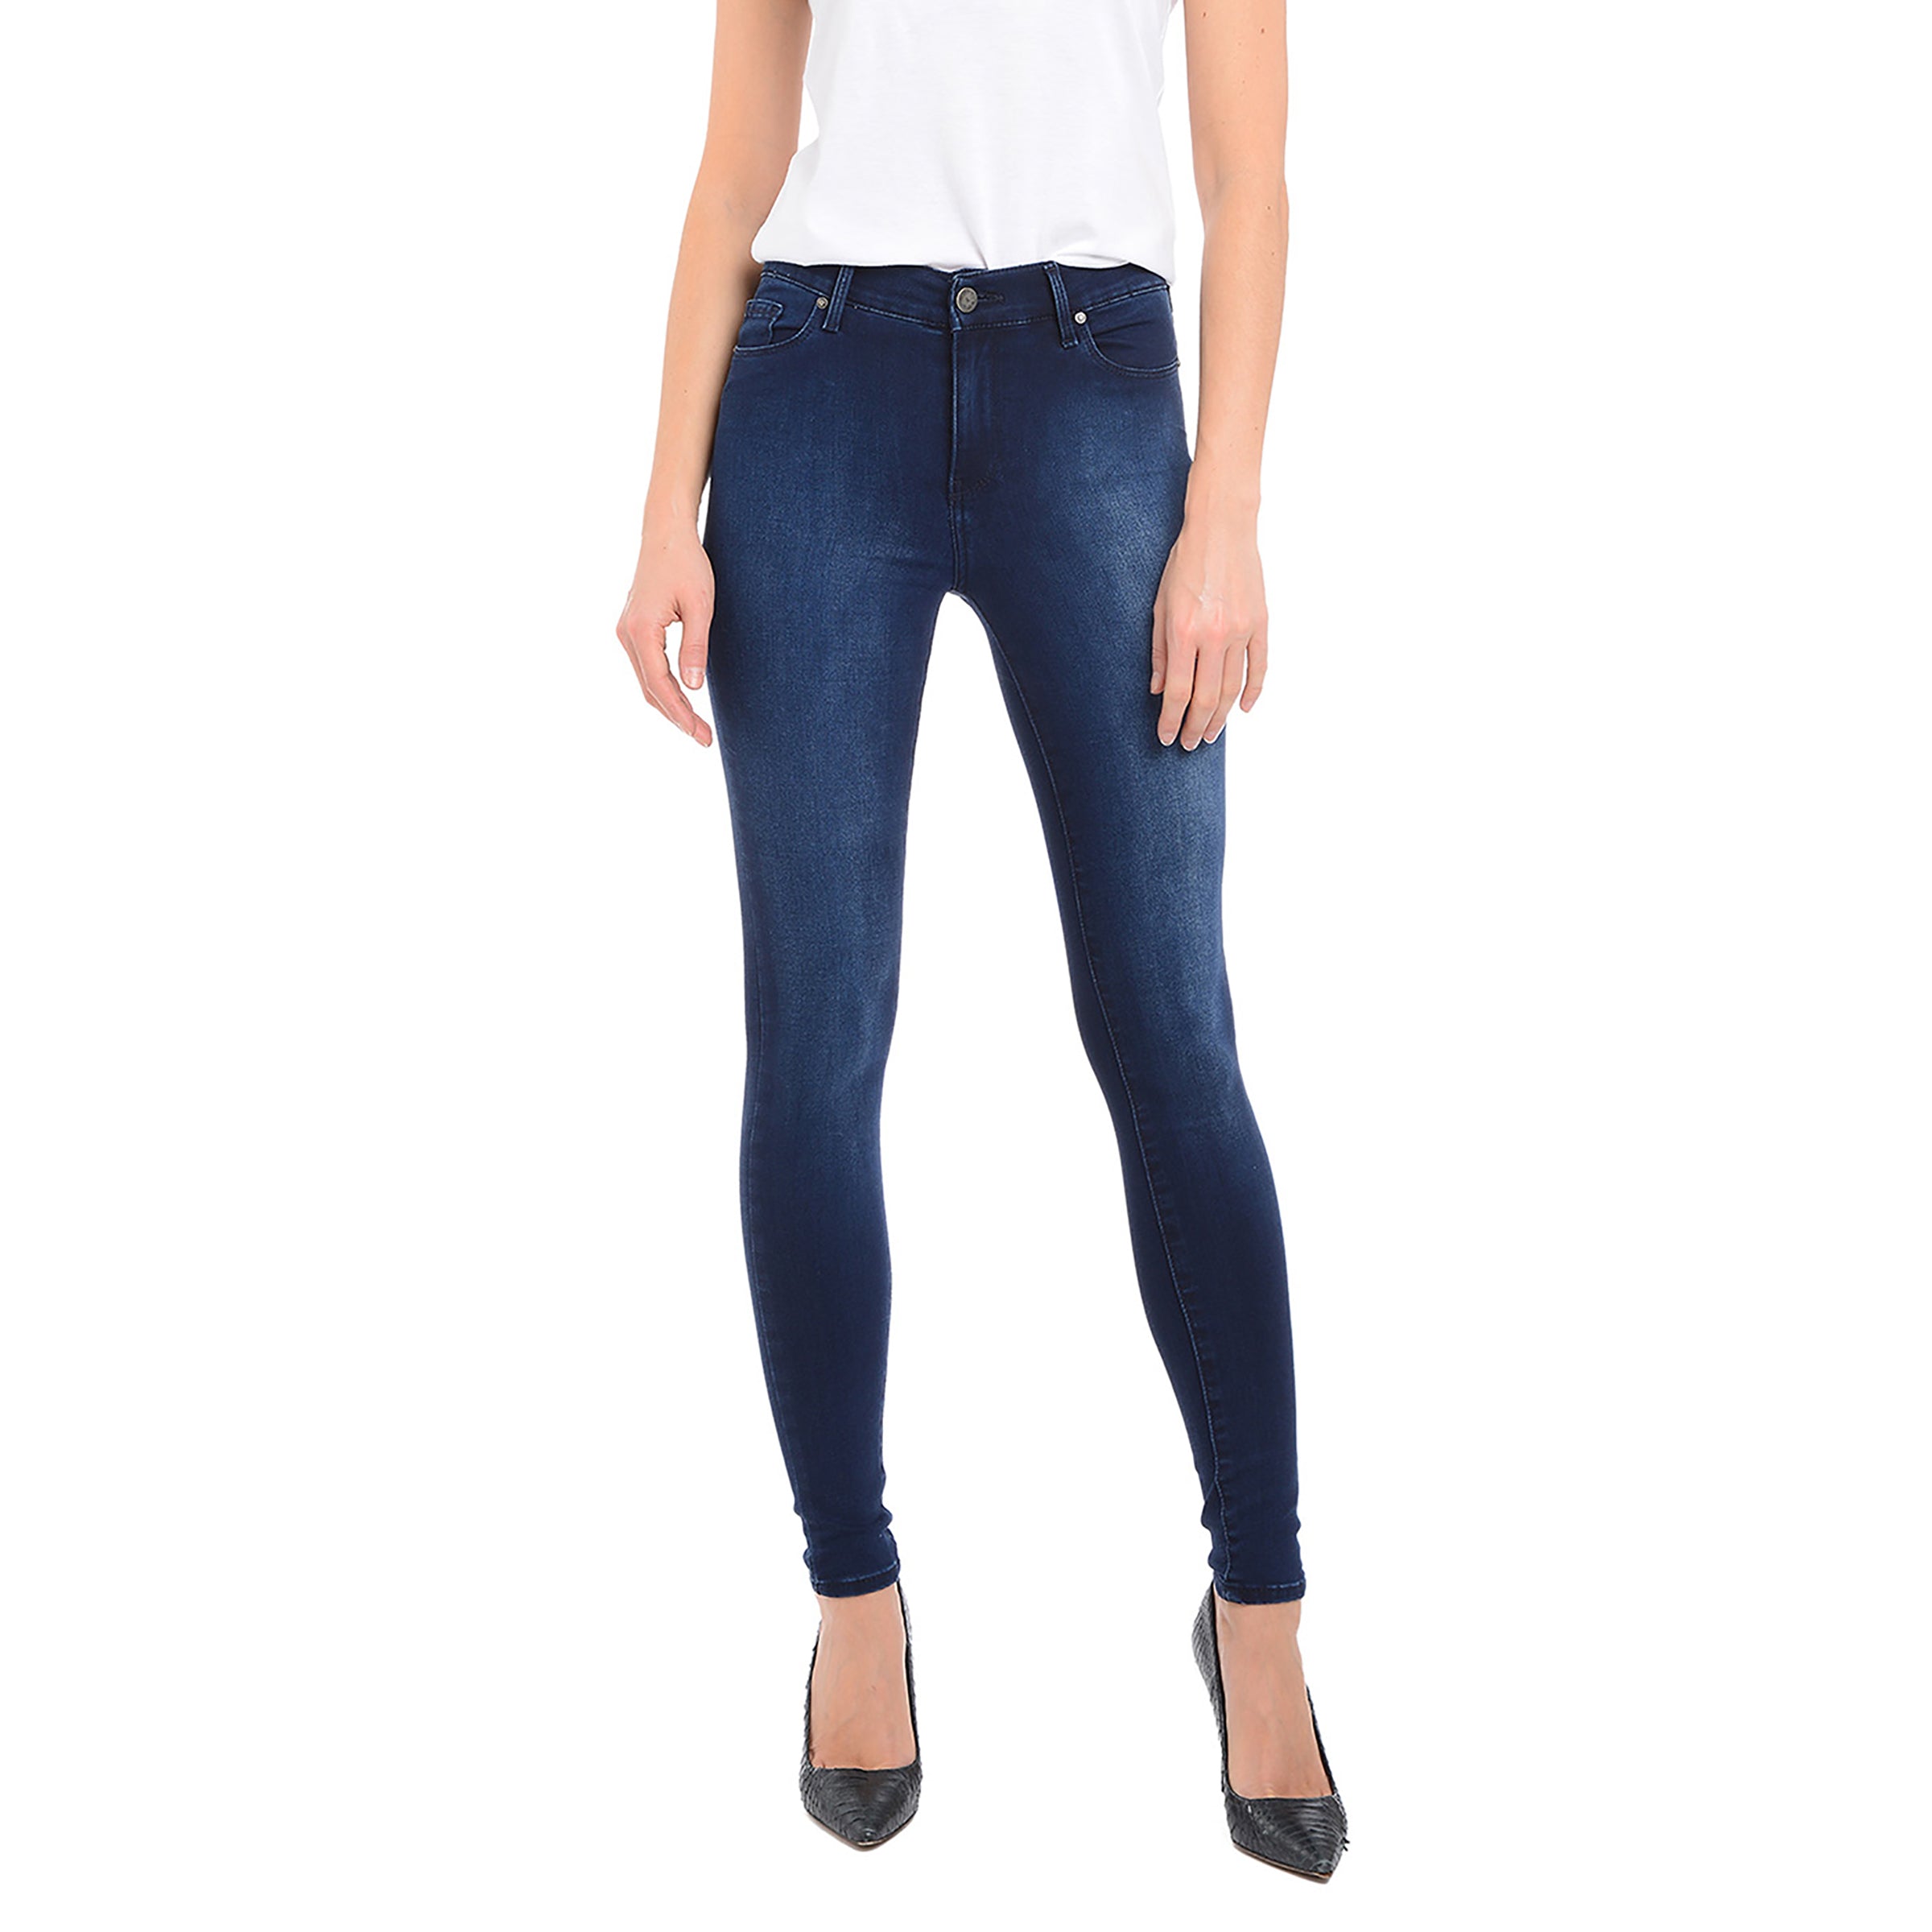 Women wearing Medium/Dark Blue High Rise Skinny Ann Jeans